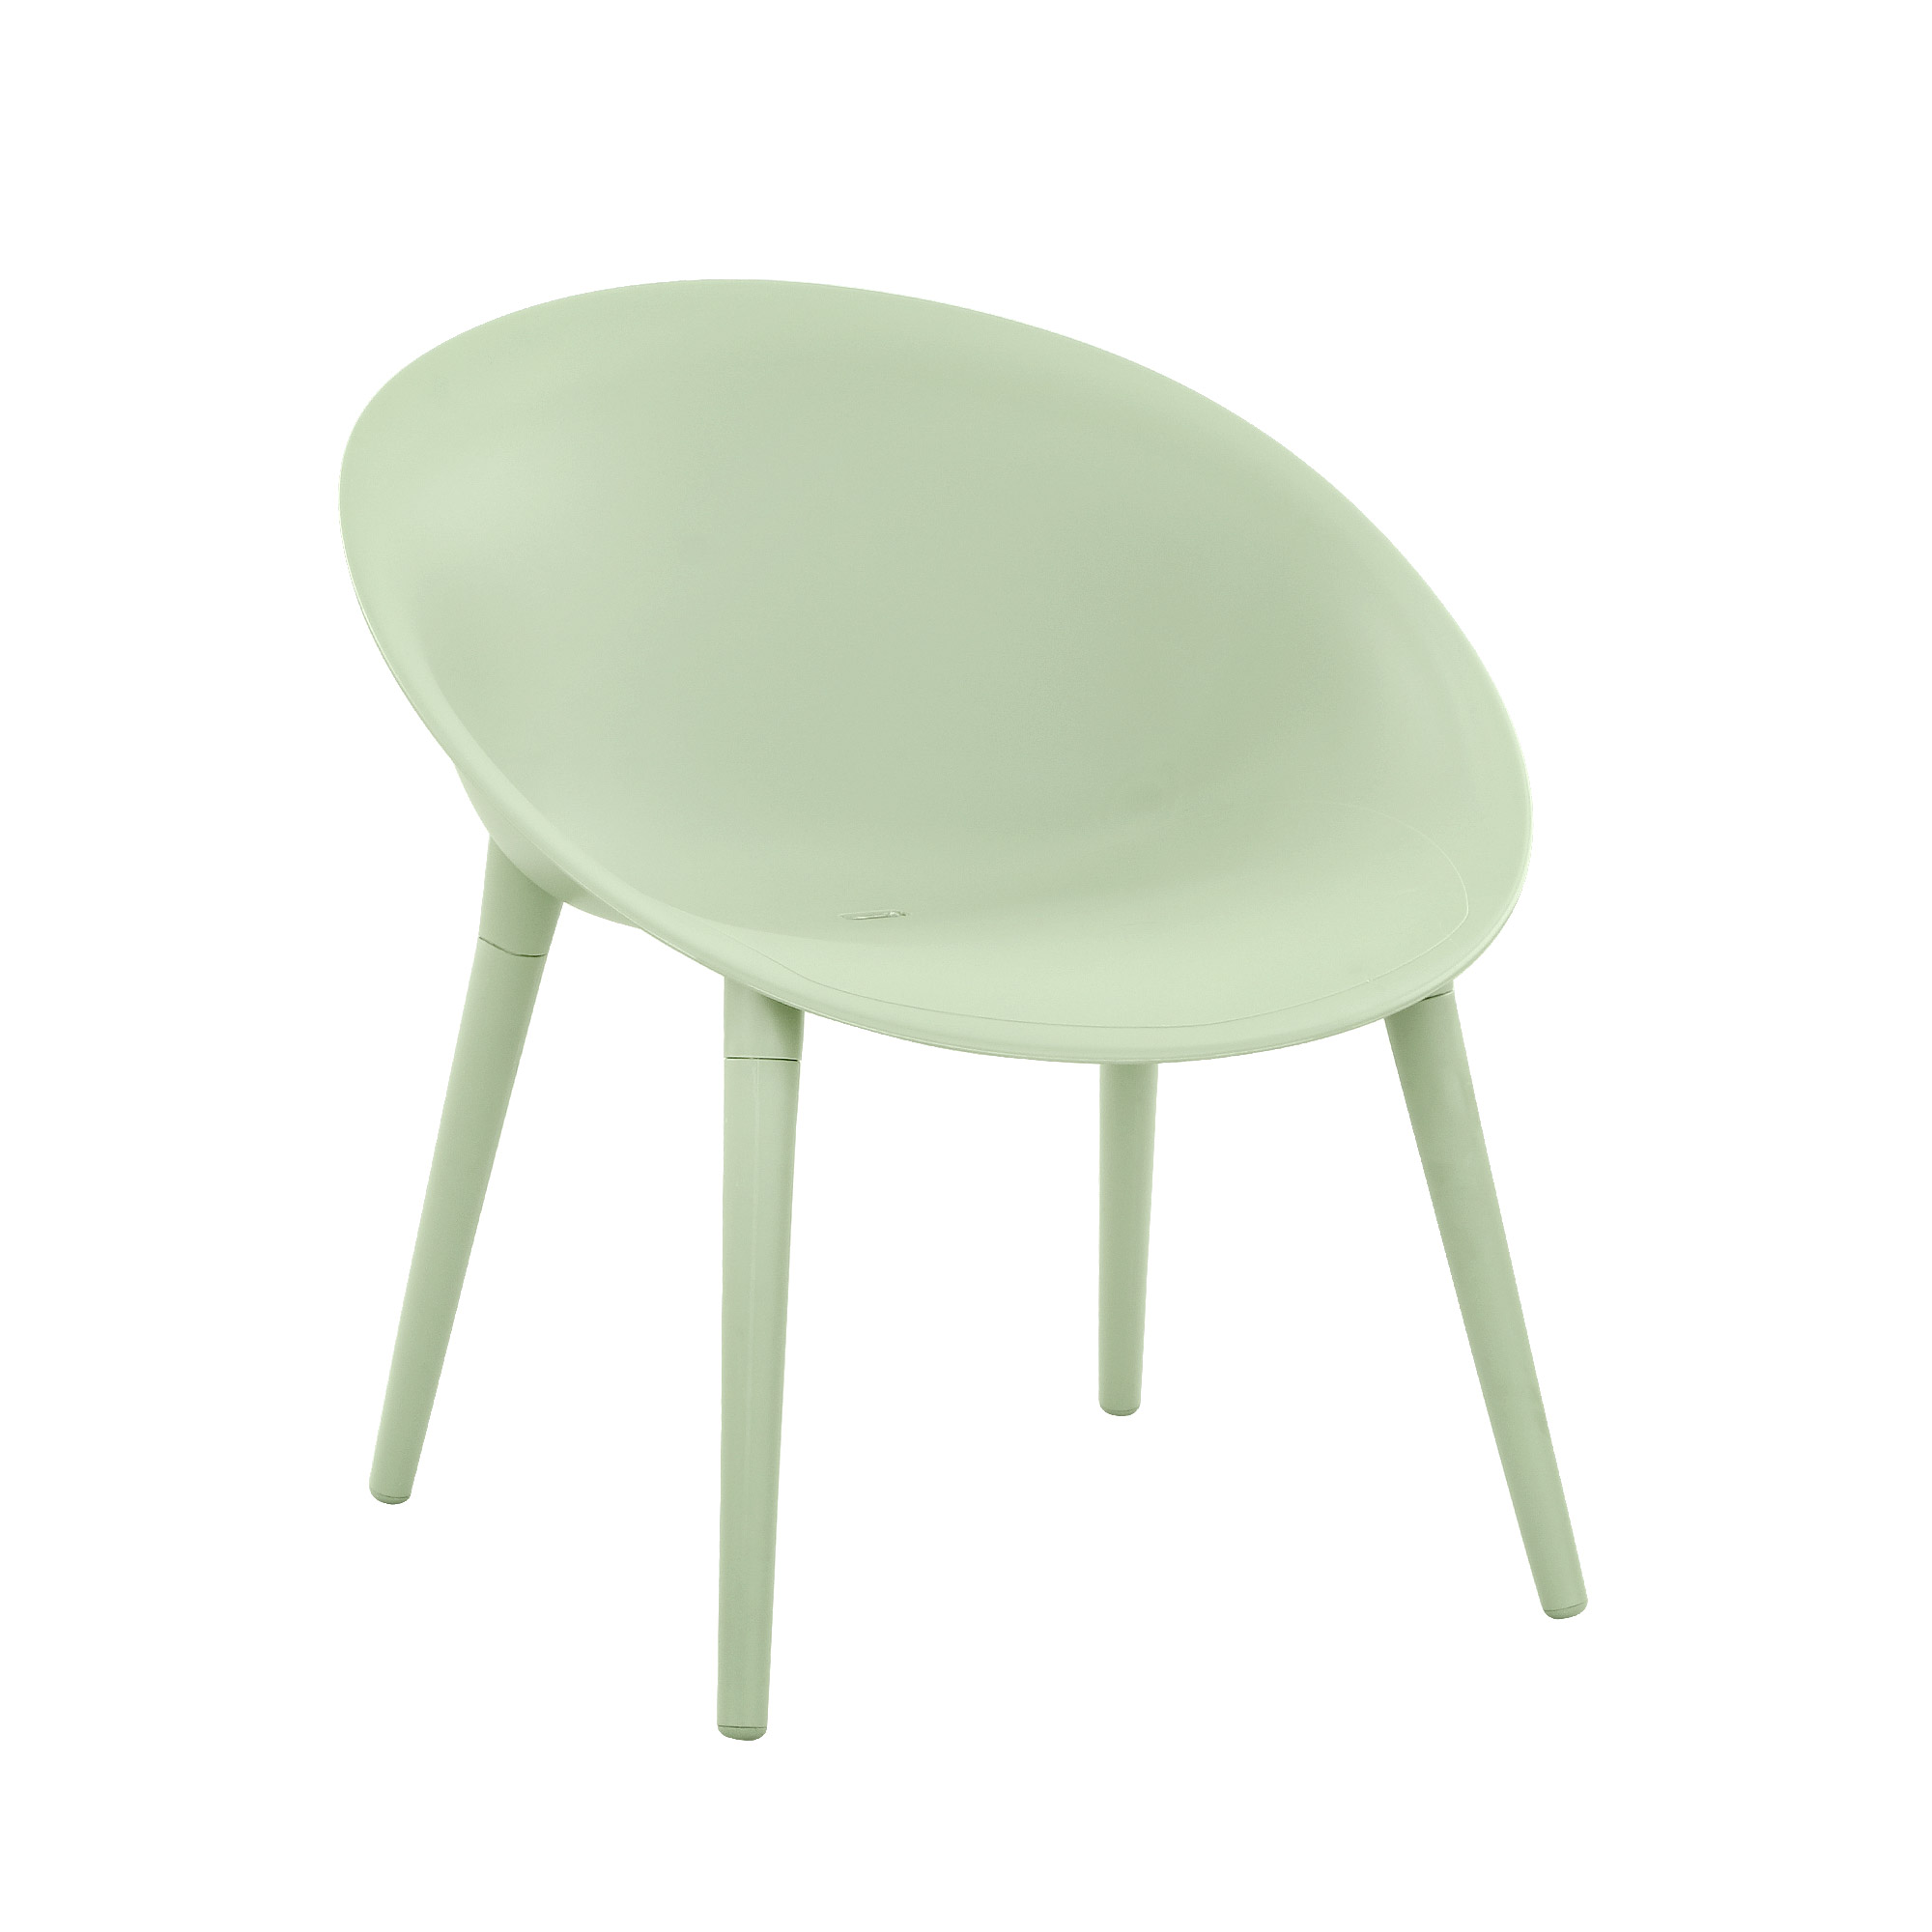 Комплект мебели Kaemingk furniture Marbella стол/2стула зеленые, цвет зеленый, размер 50х50х45 см - фото 2